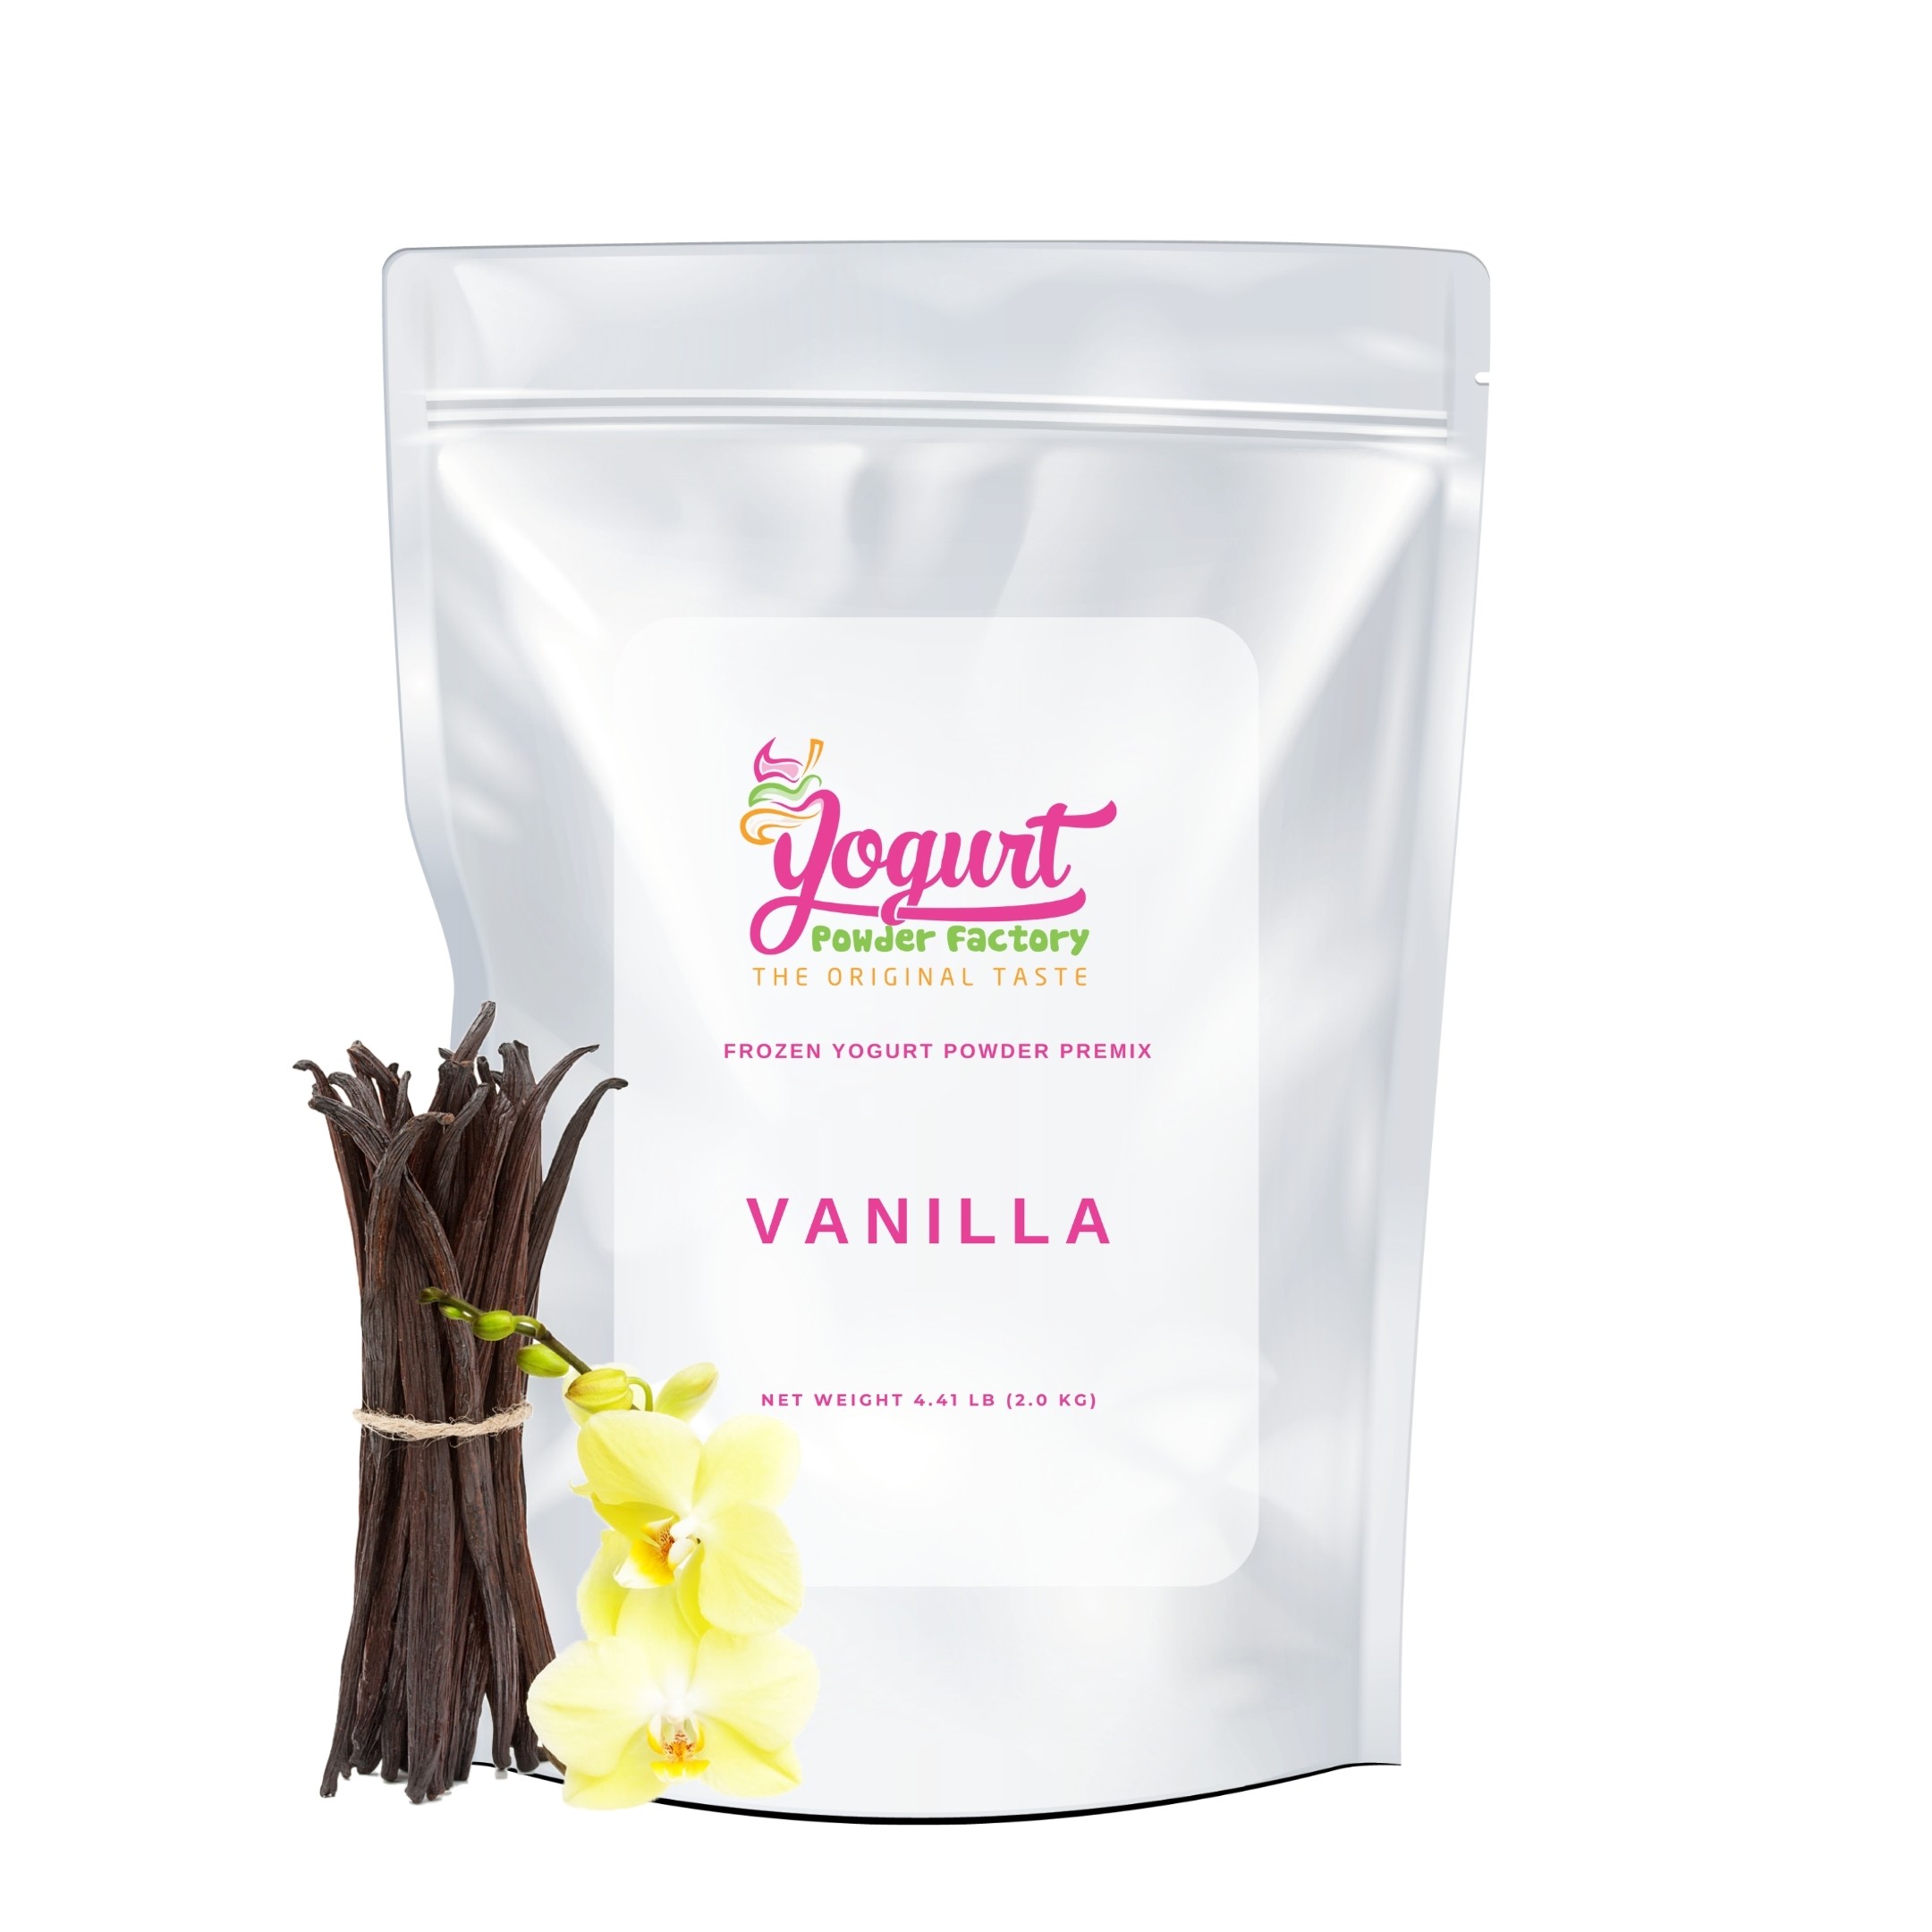 Vanilla Frozen Yogurt Powder Pre Mix One Bag (2kg/4.4lb)